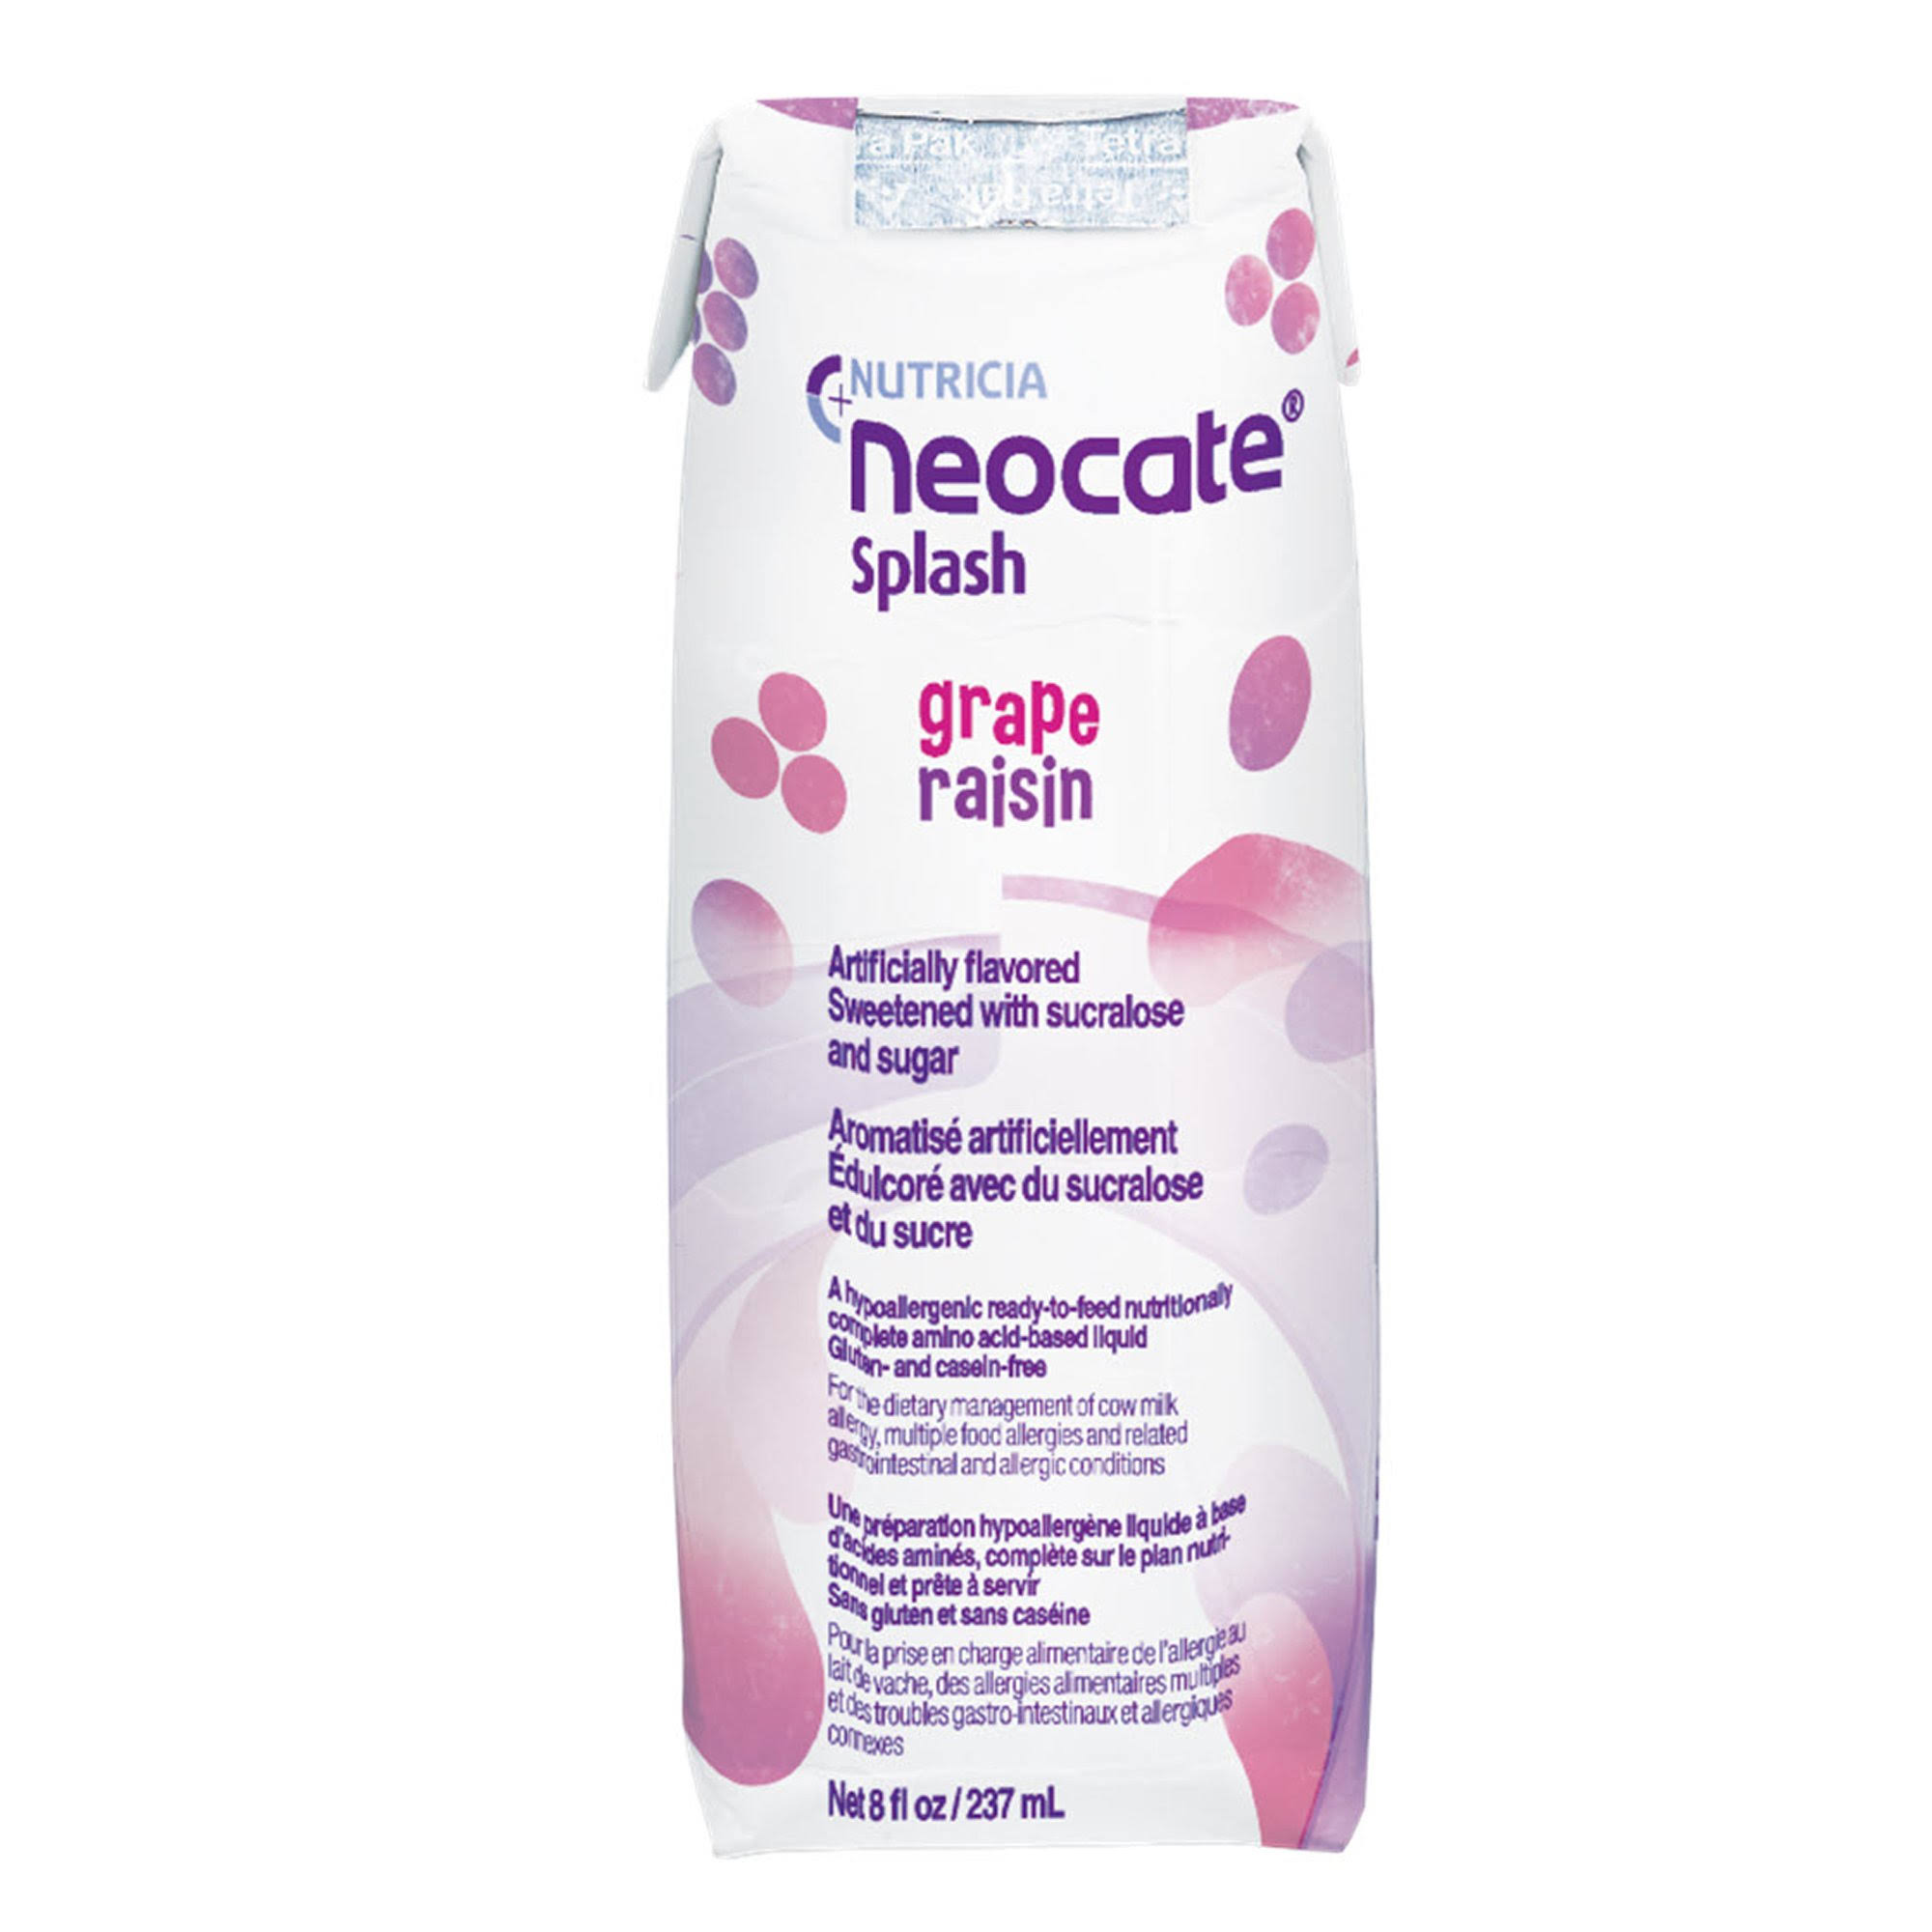 Neocate Splash Grape Pediatric Oral Supplement / Tube Feeding Formula, 8 oz. Carton